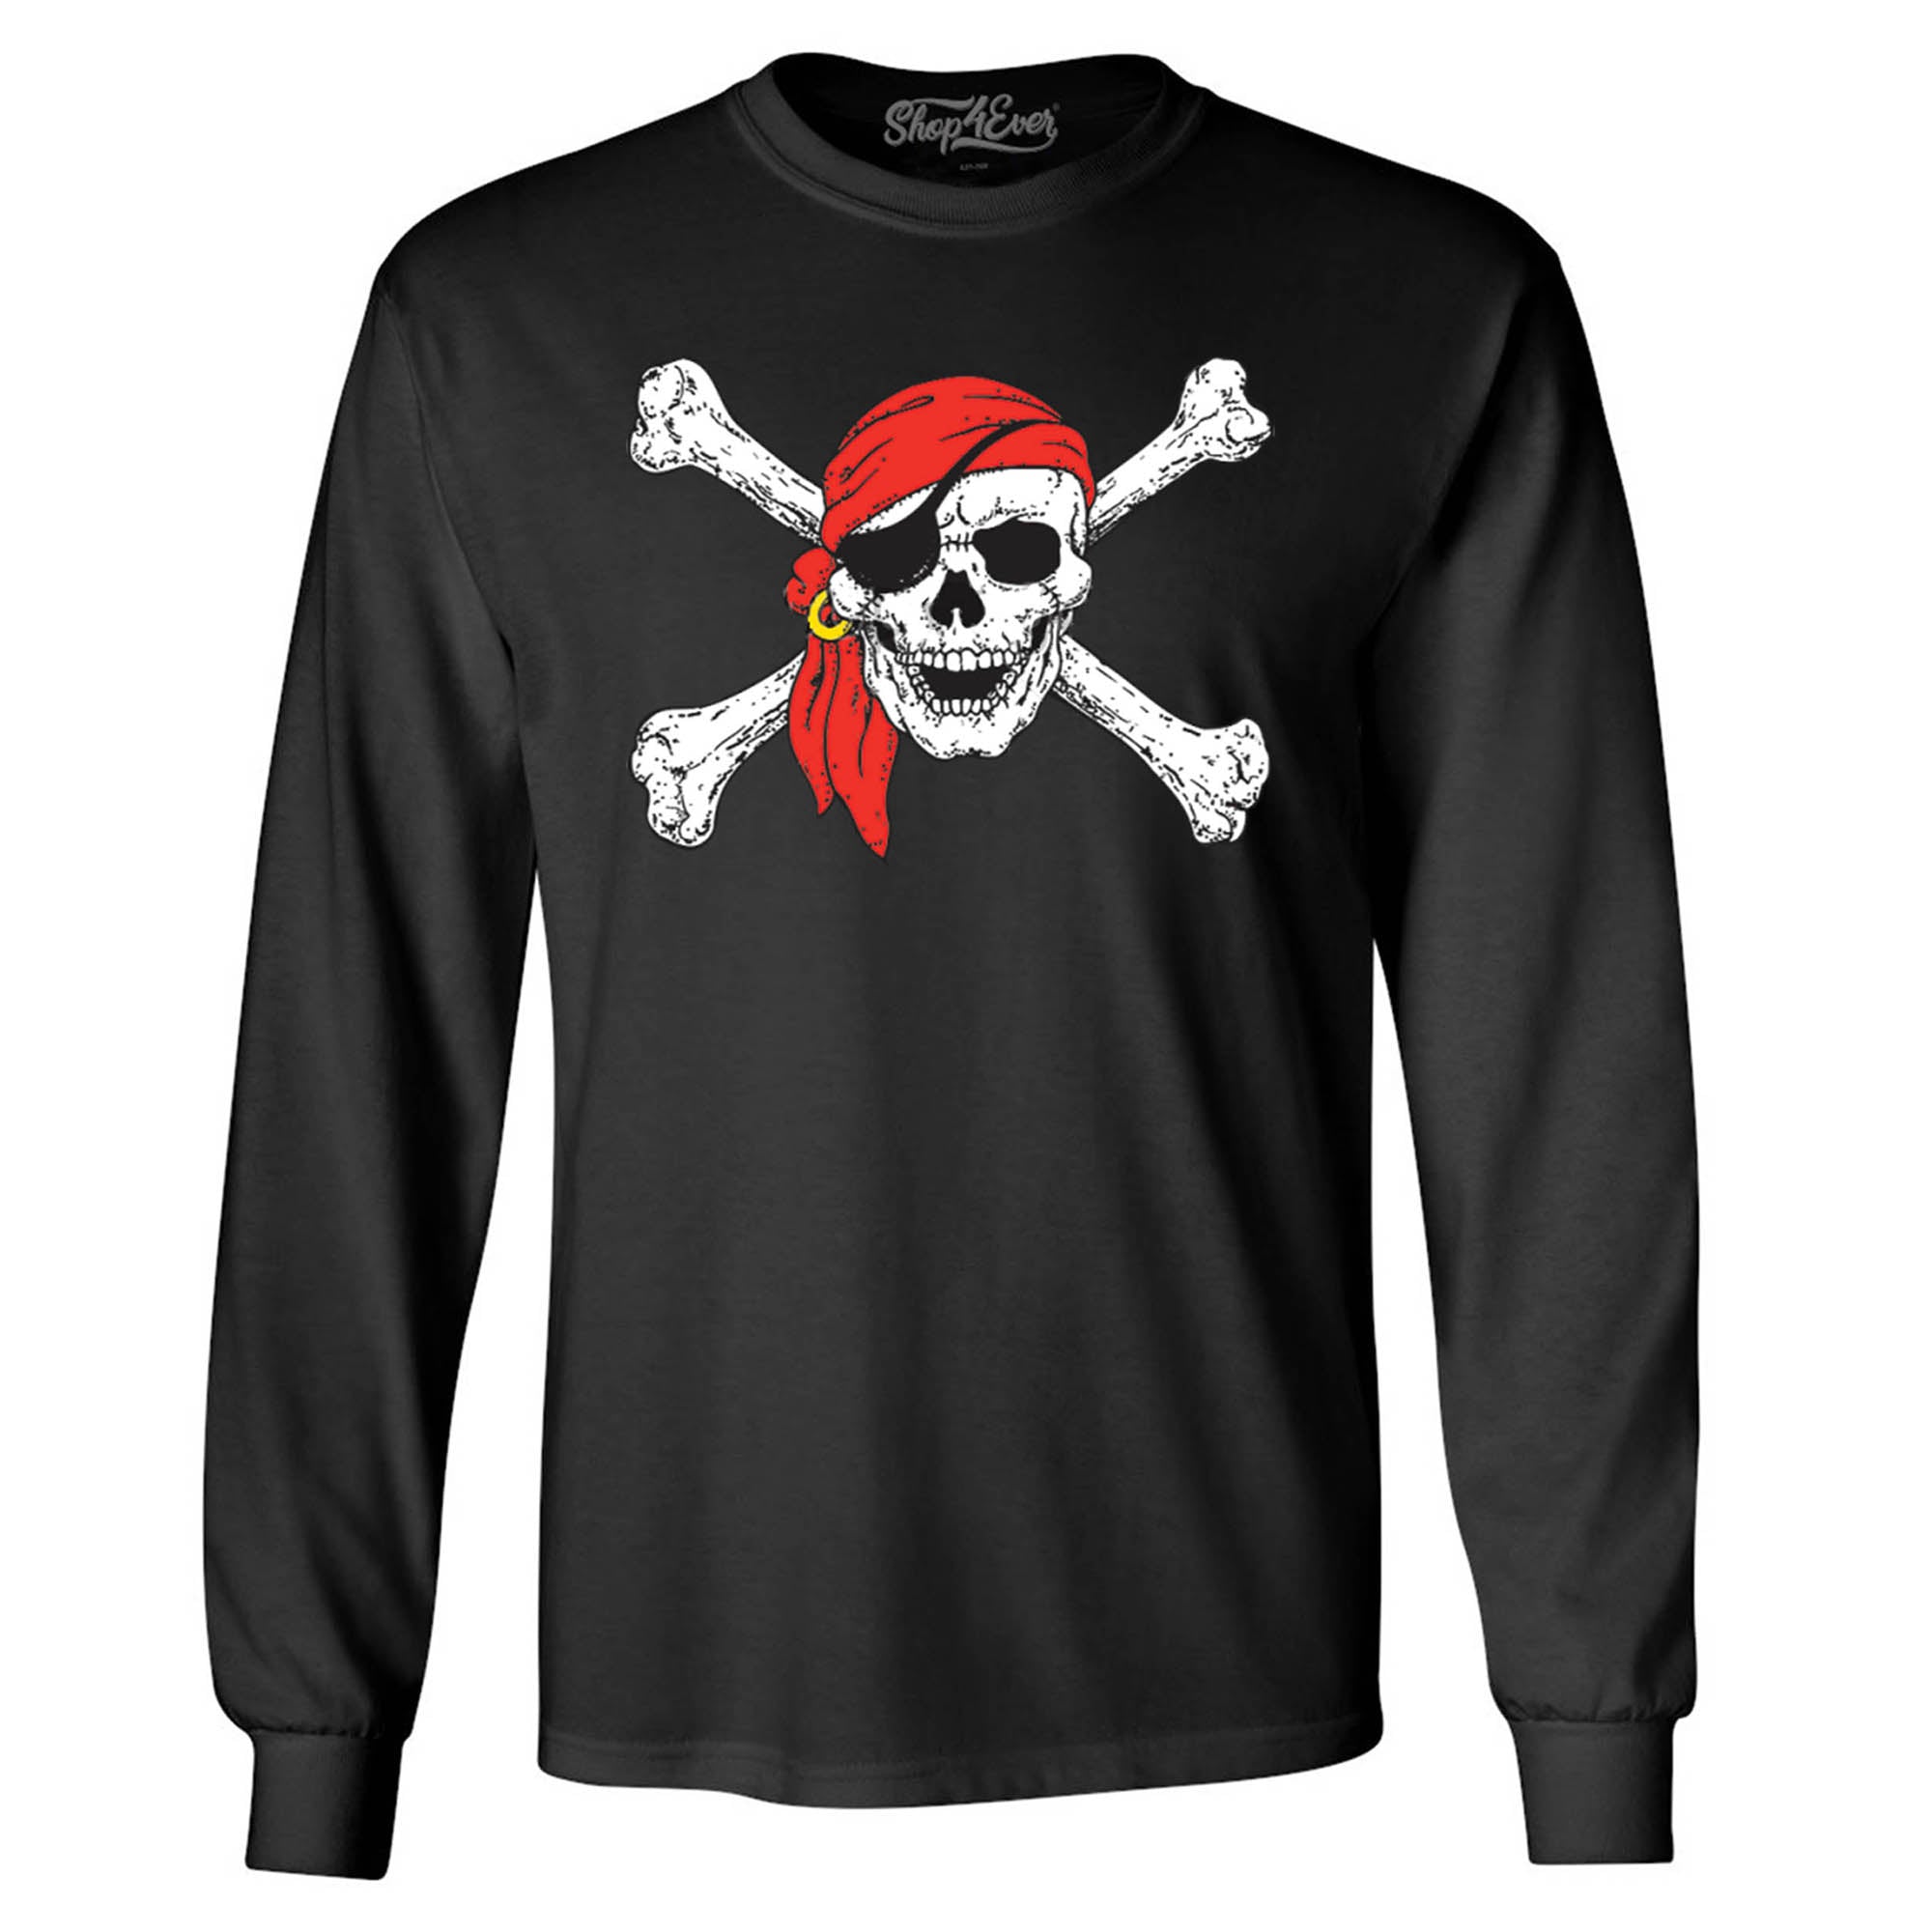 Pirate Skull and Crossbones Long Sleeve Shirt Pirate Flag Shirts